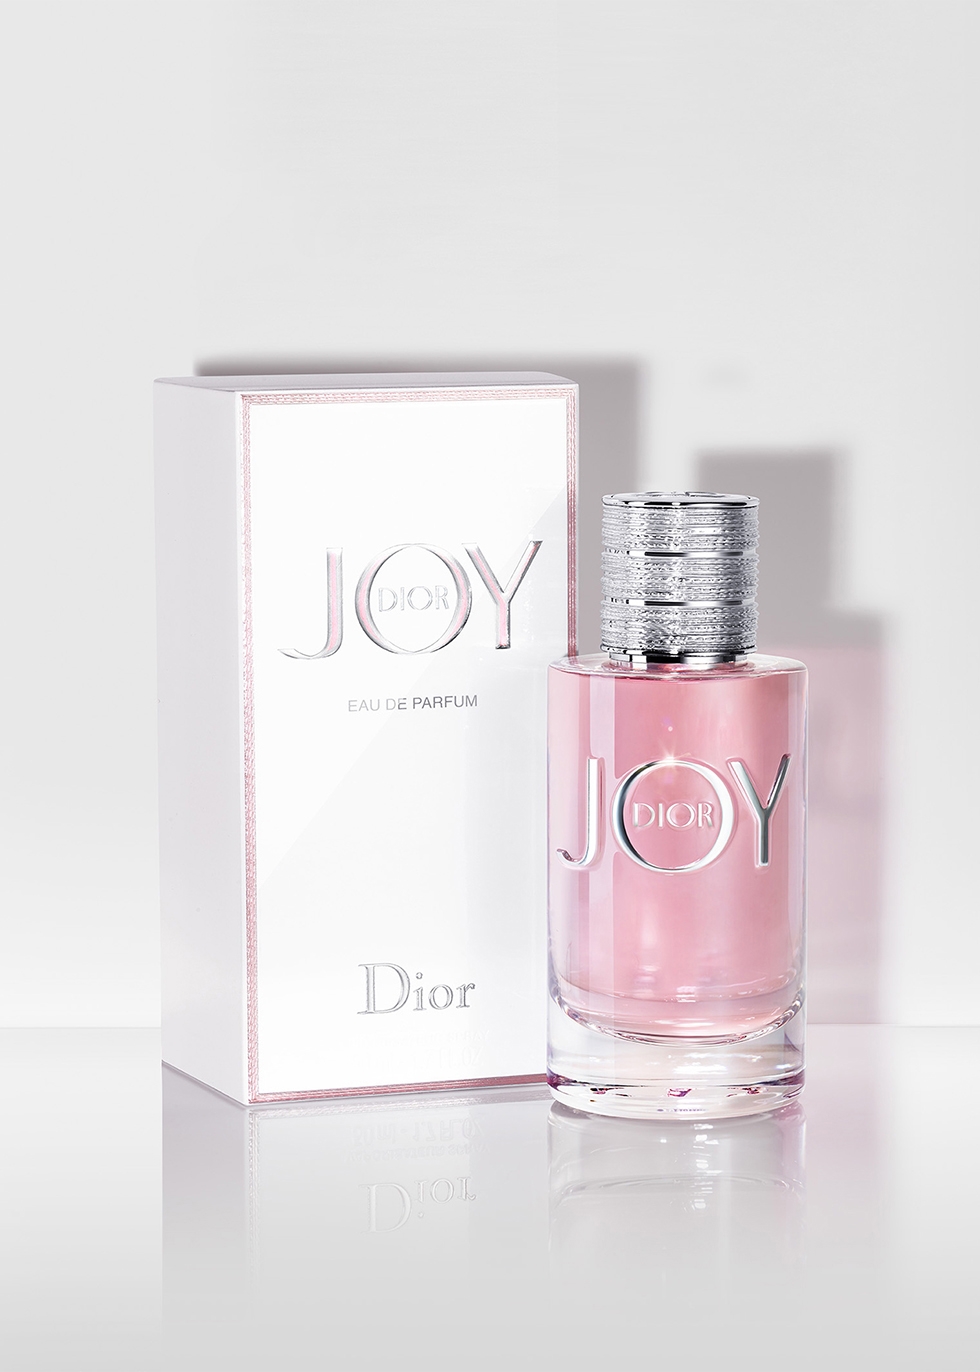 dior joy 30ml eau de parfum